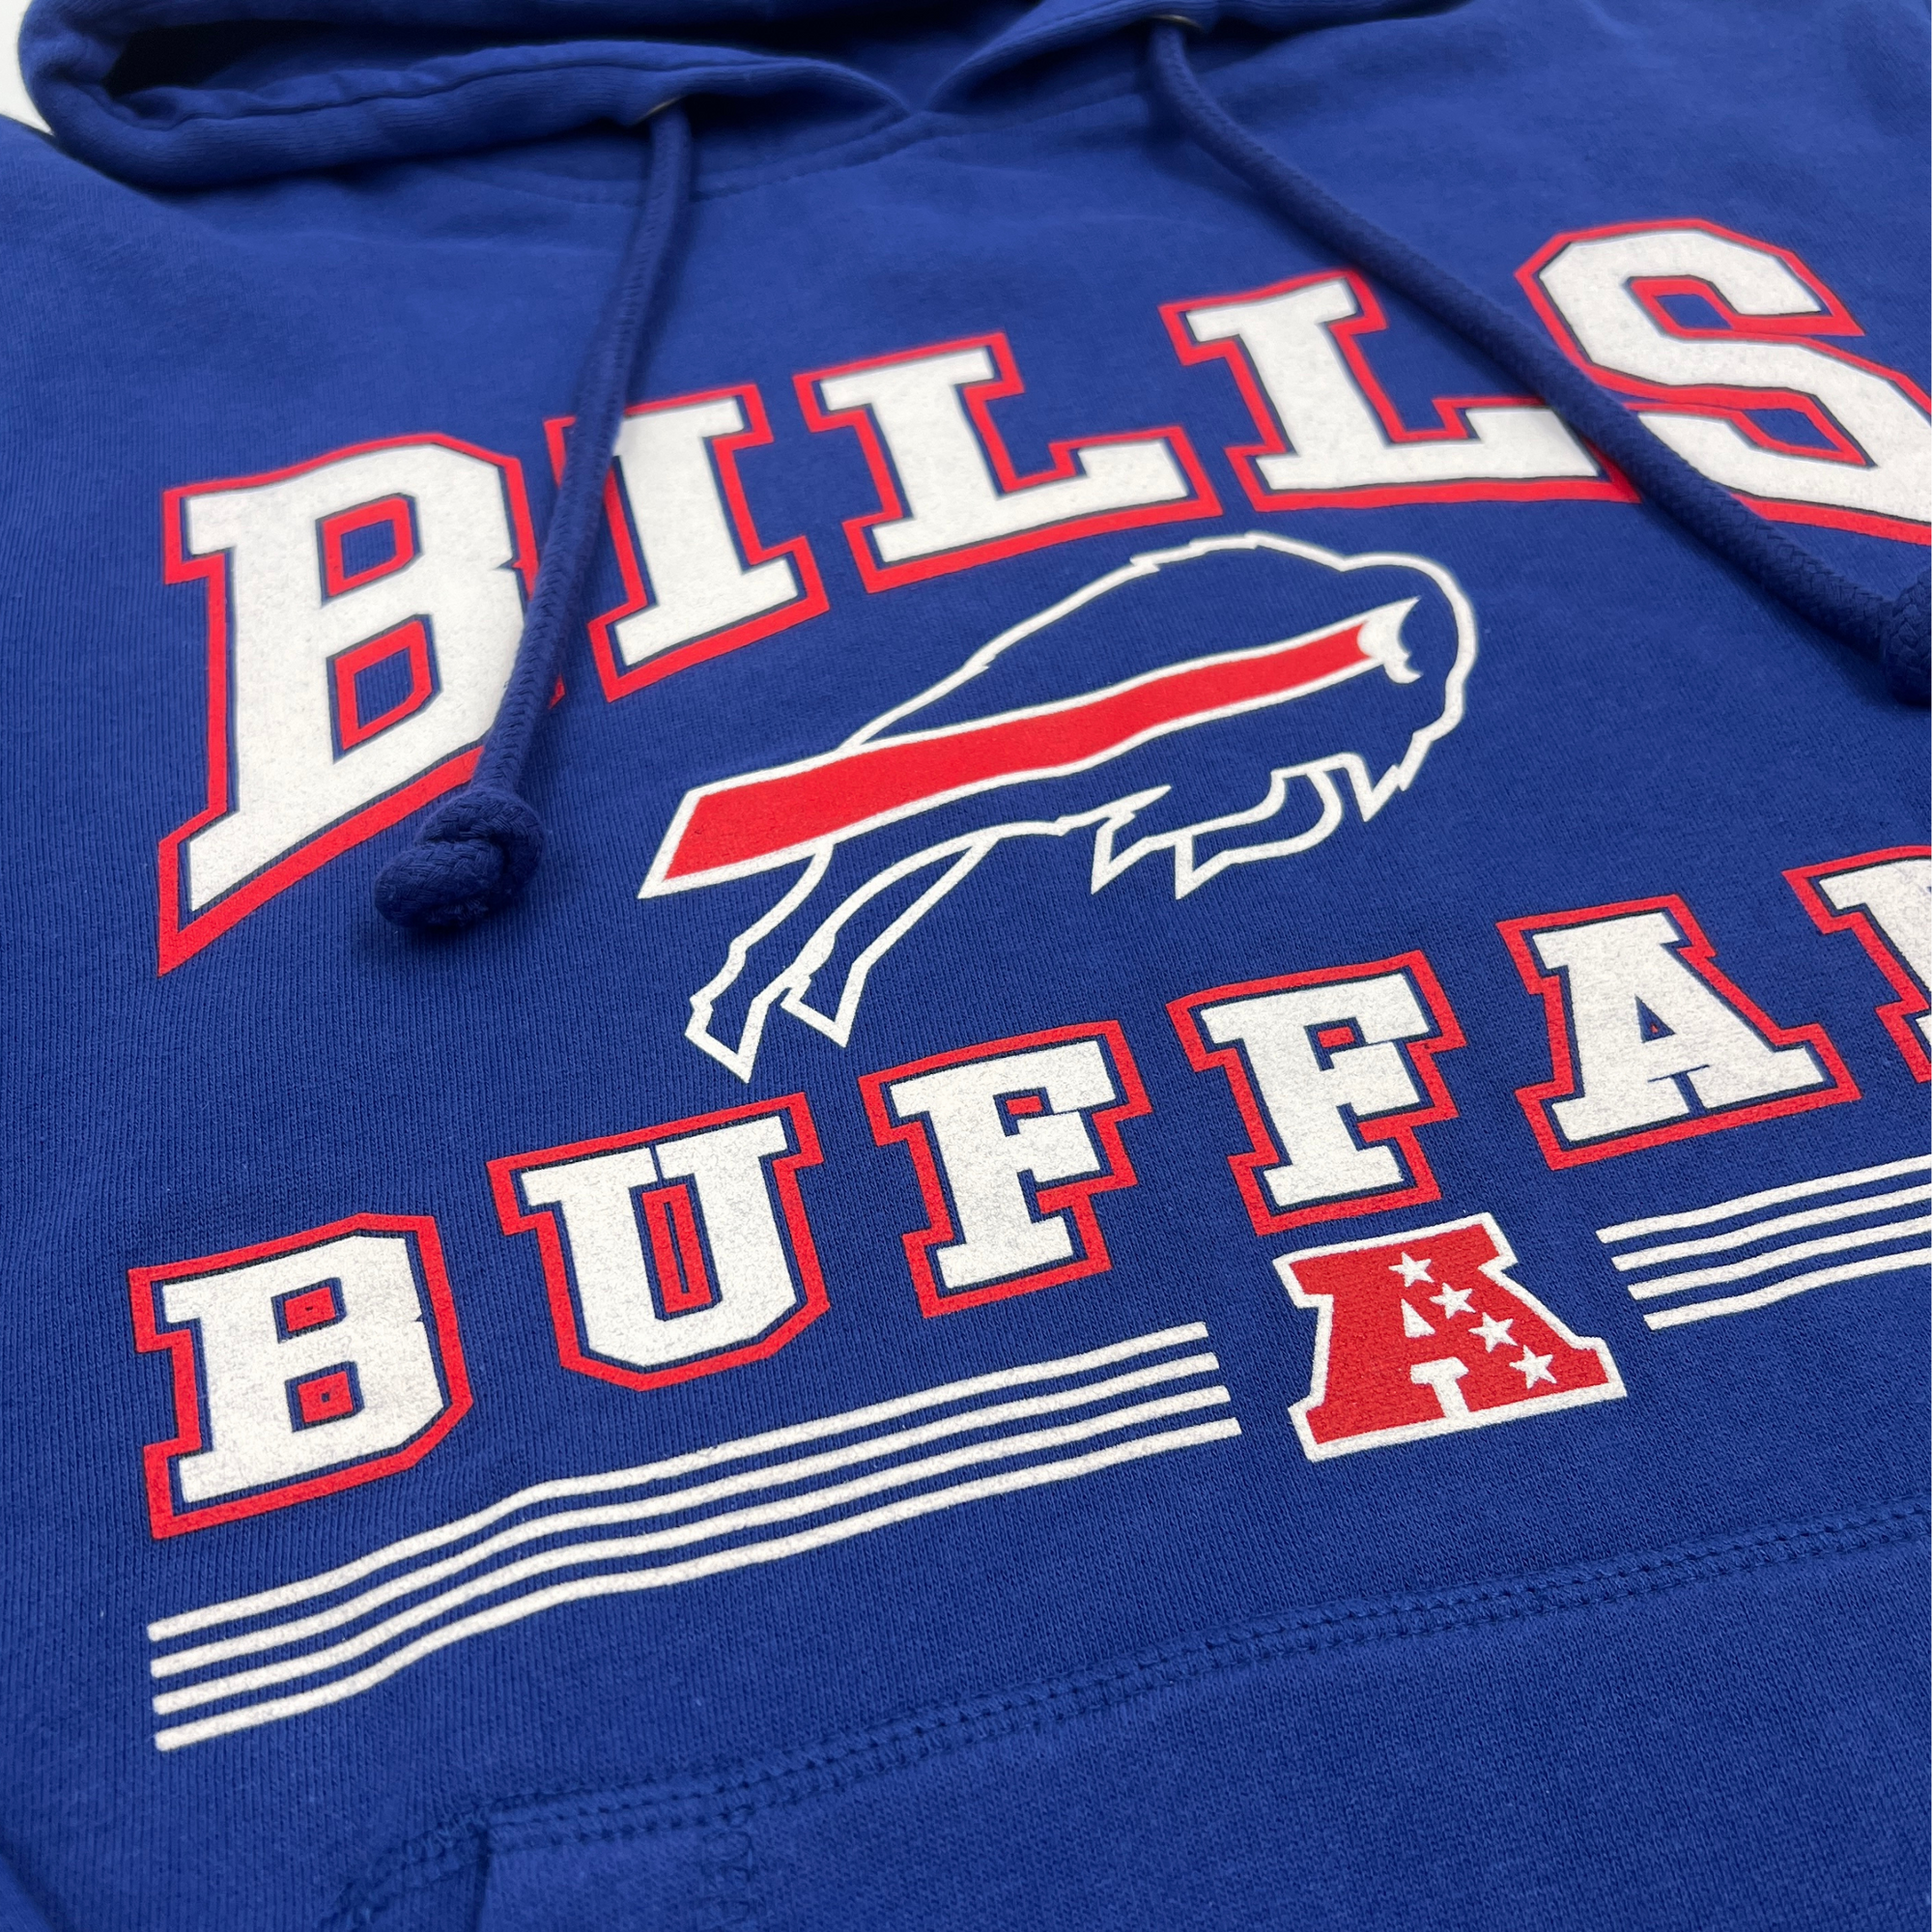 &#39;47 Brand Buffalo Bills Royal Blue Headline Hoodie